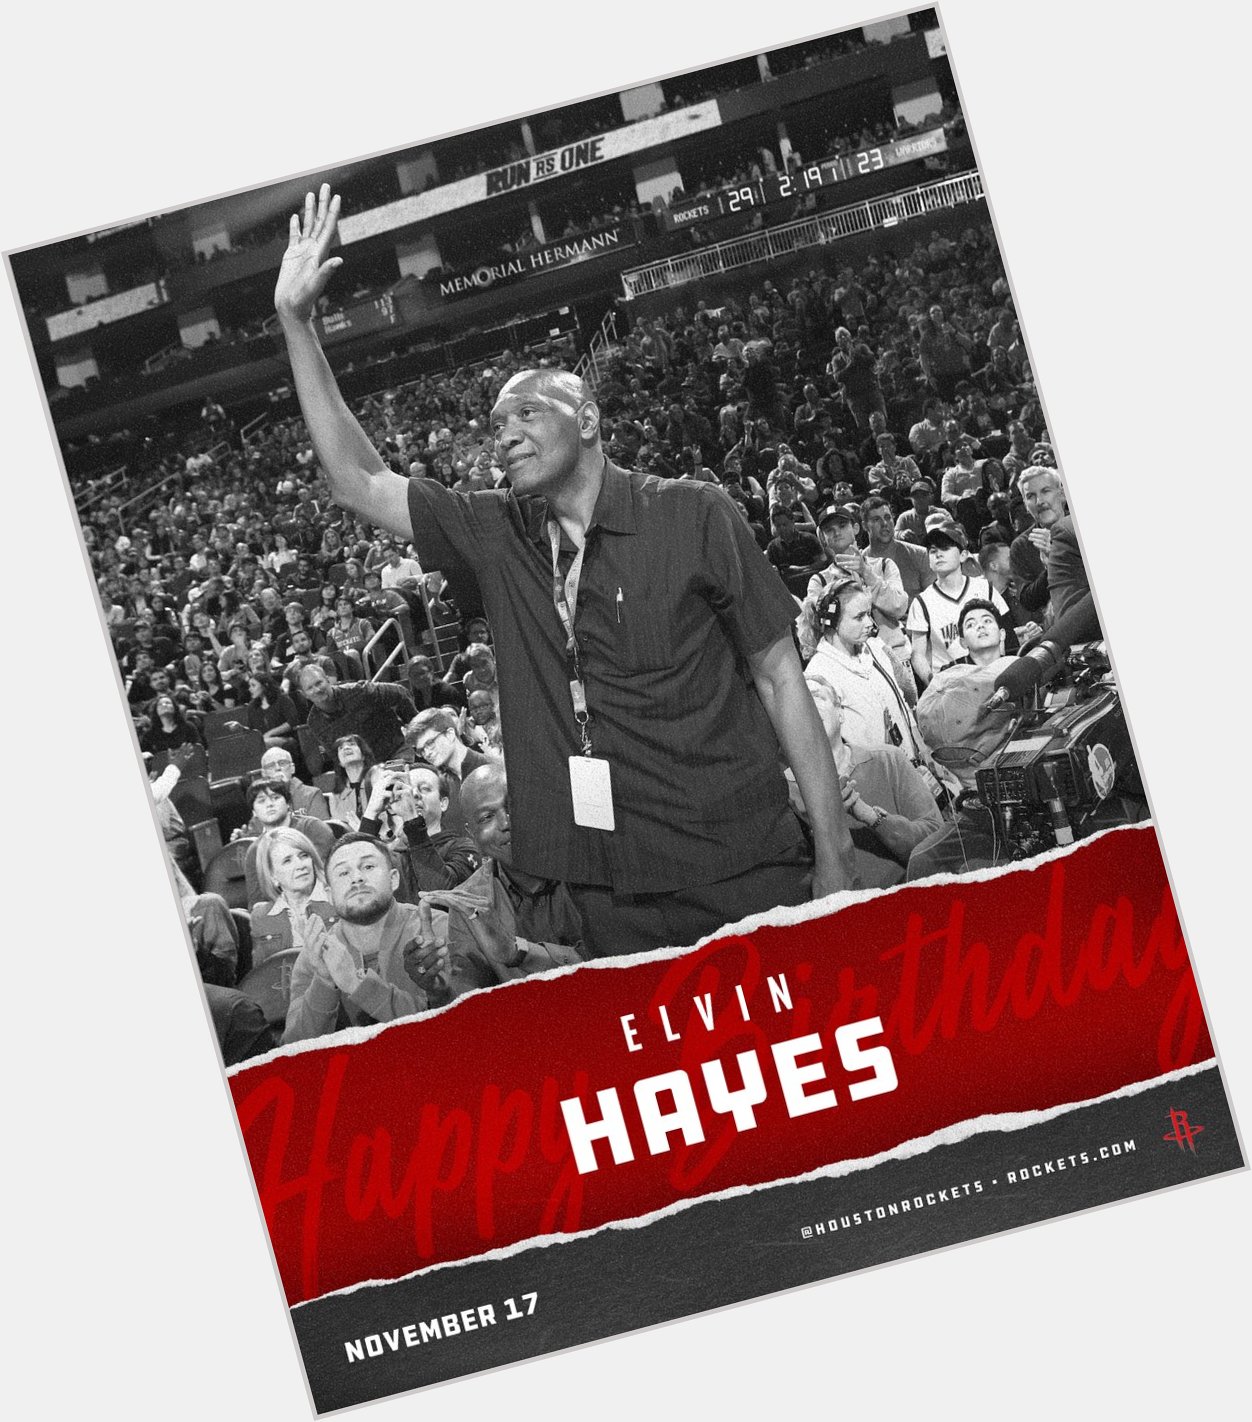  Happy birthday to Rockets Legend Elvin Hayes! 